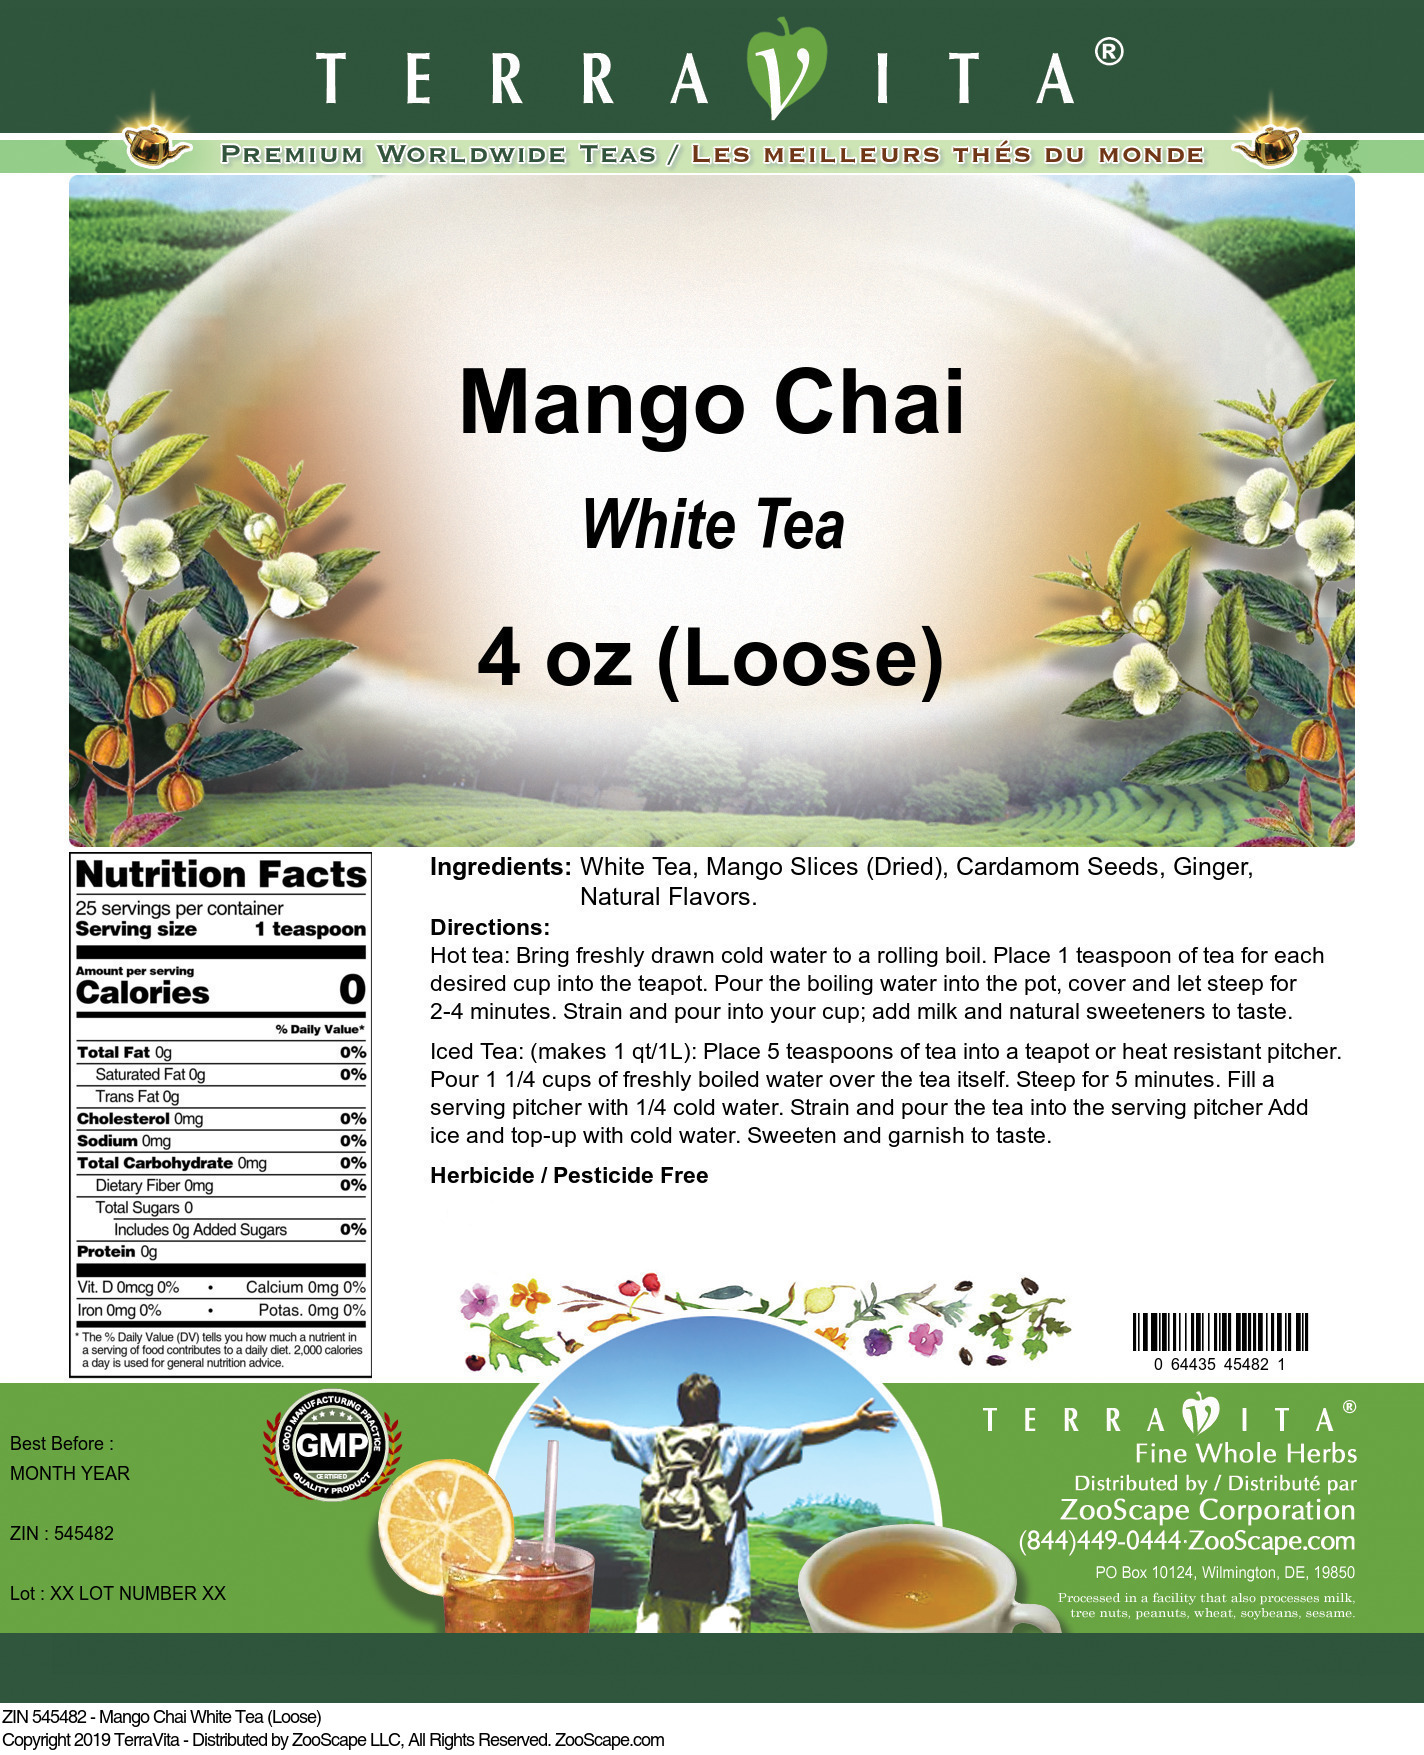 Mango Chai White Tea (Loose) - Label